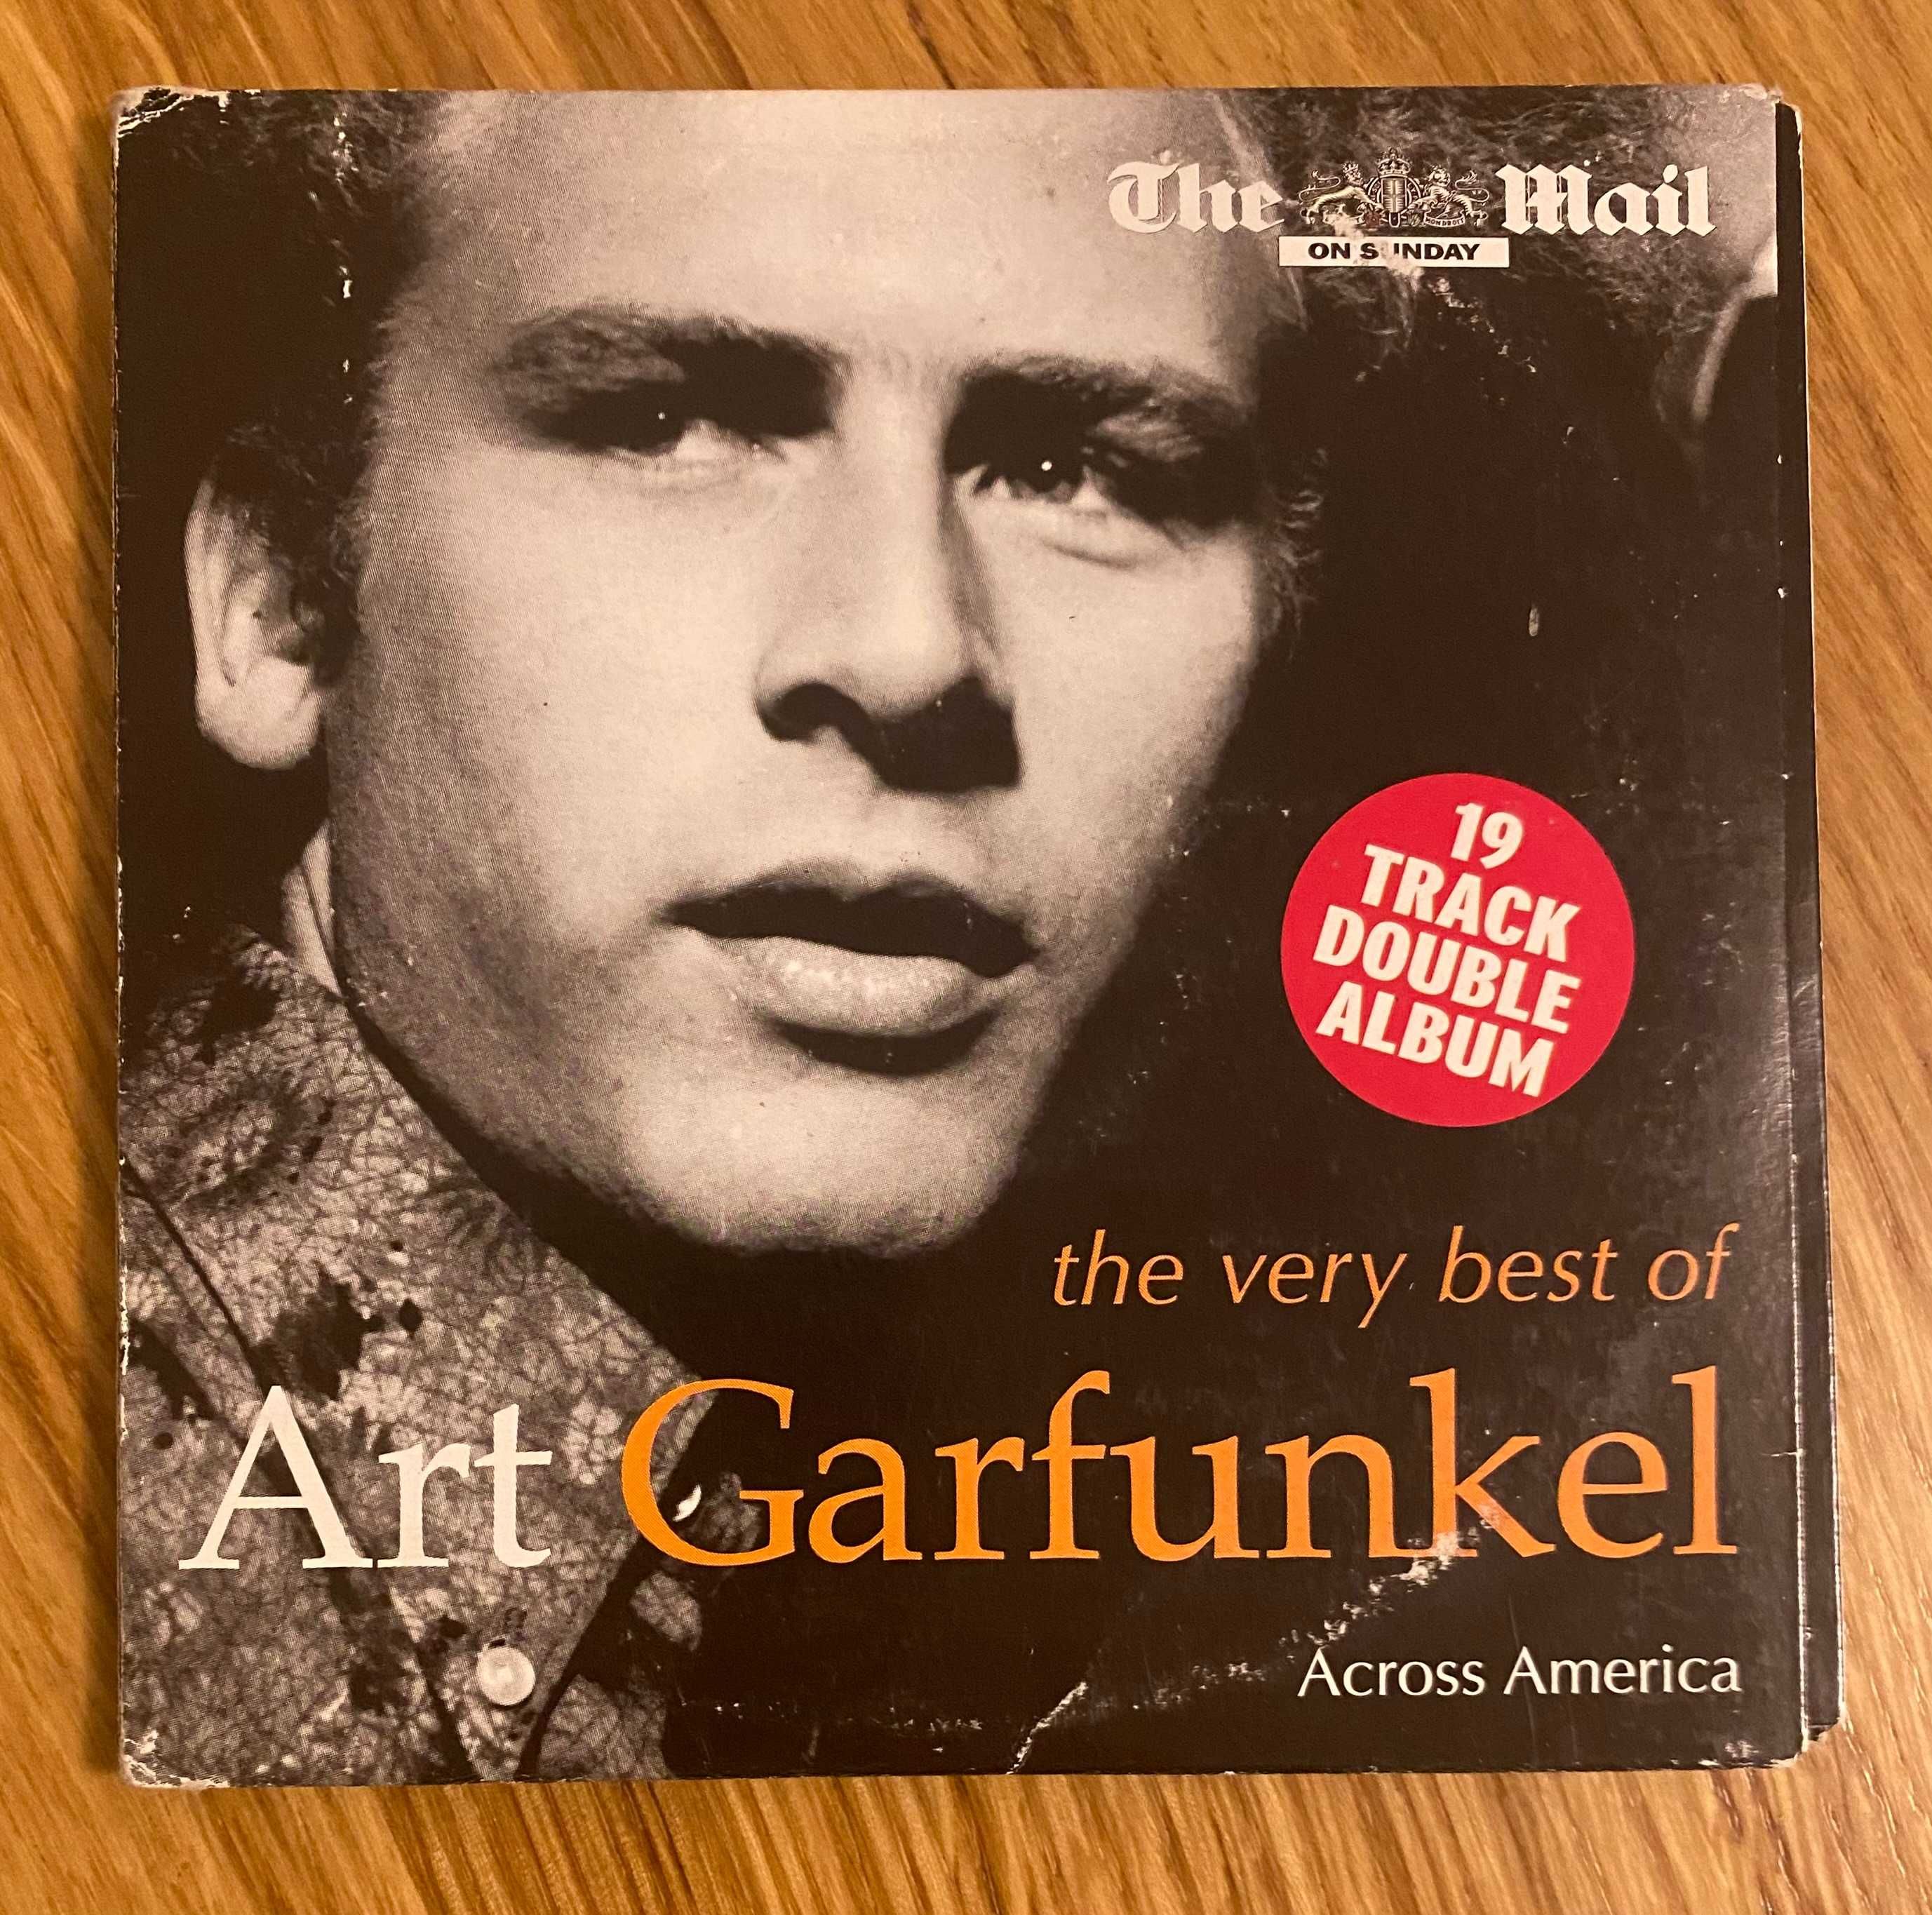 CDx2 - Art Garfunkel – The Very Best Of Art Garfunkel (Across America)